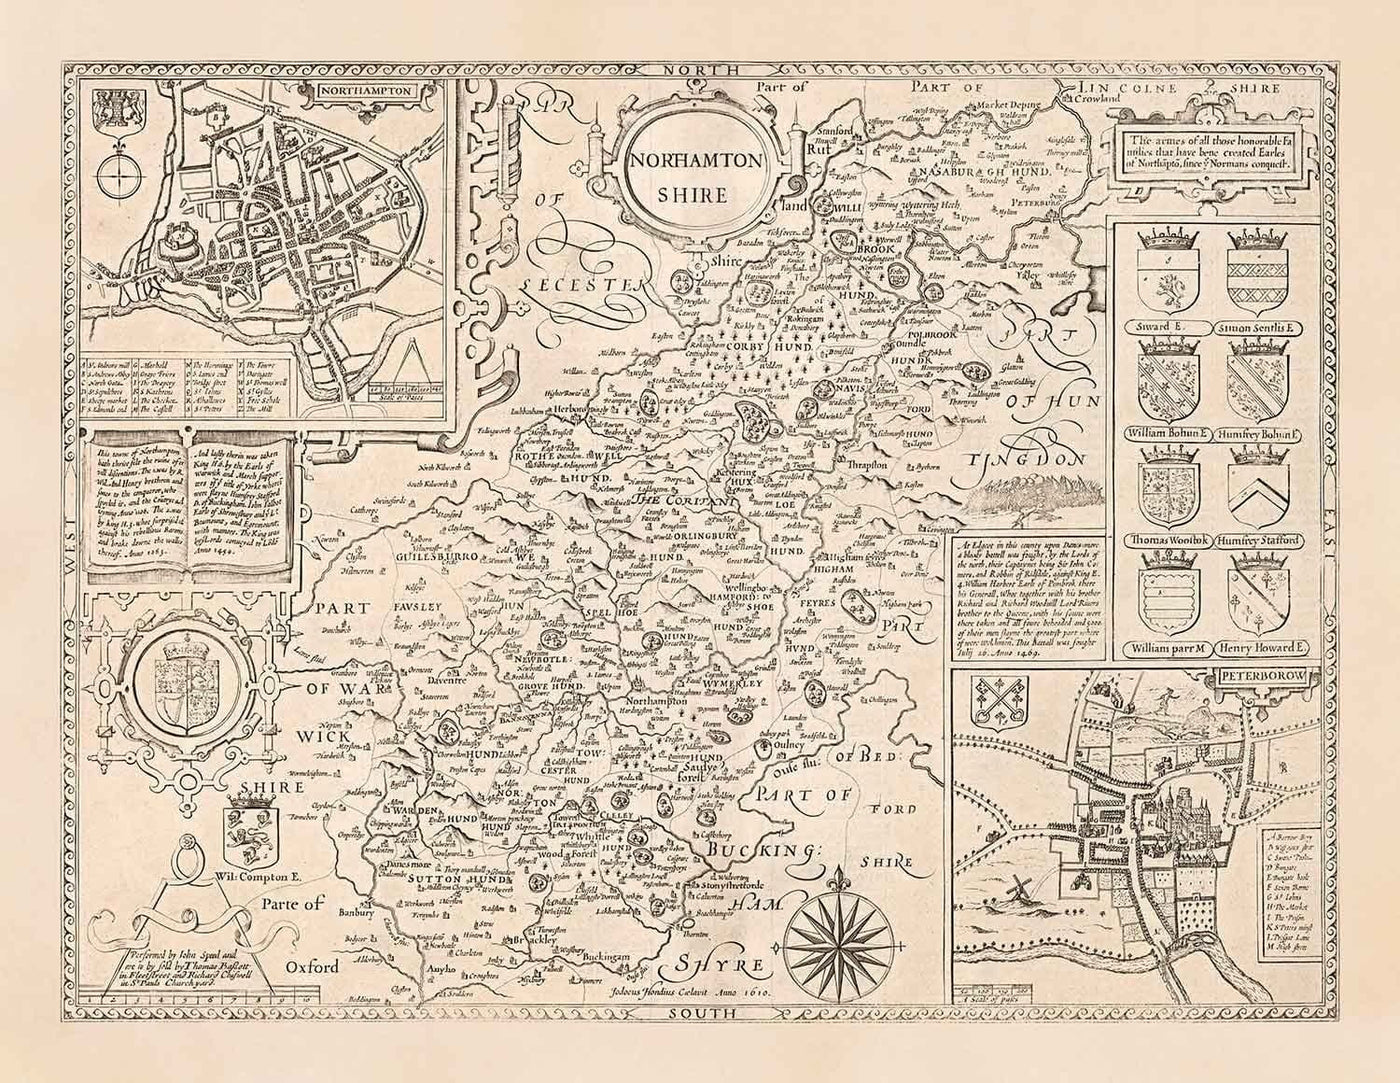 Antiguo mapa monocromo de Northamptonshire, 1611 por John Speed - Northampton, Kettering, Peterborough, Corby, Stamford, Brackley